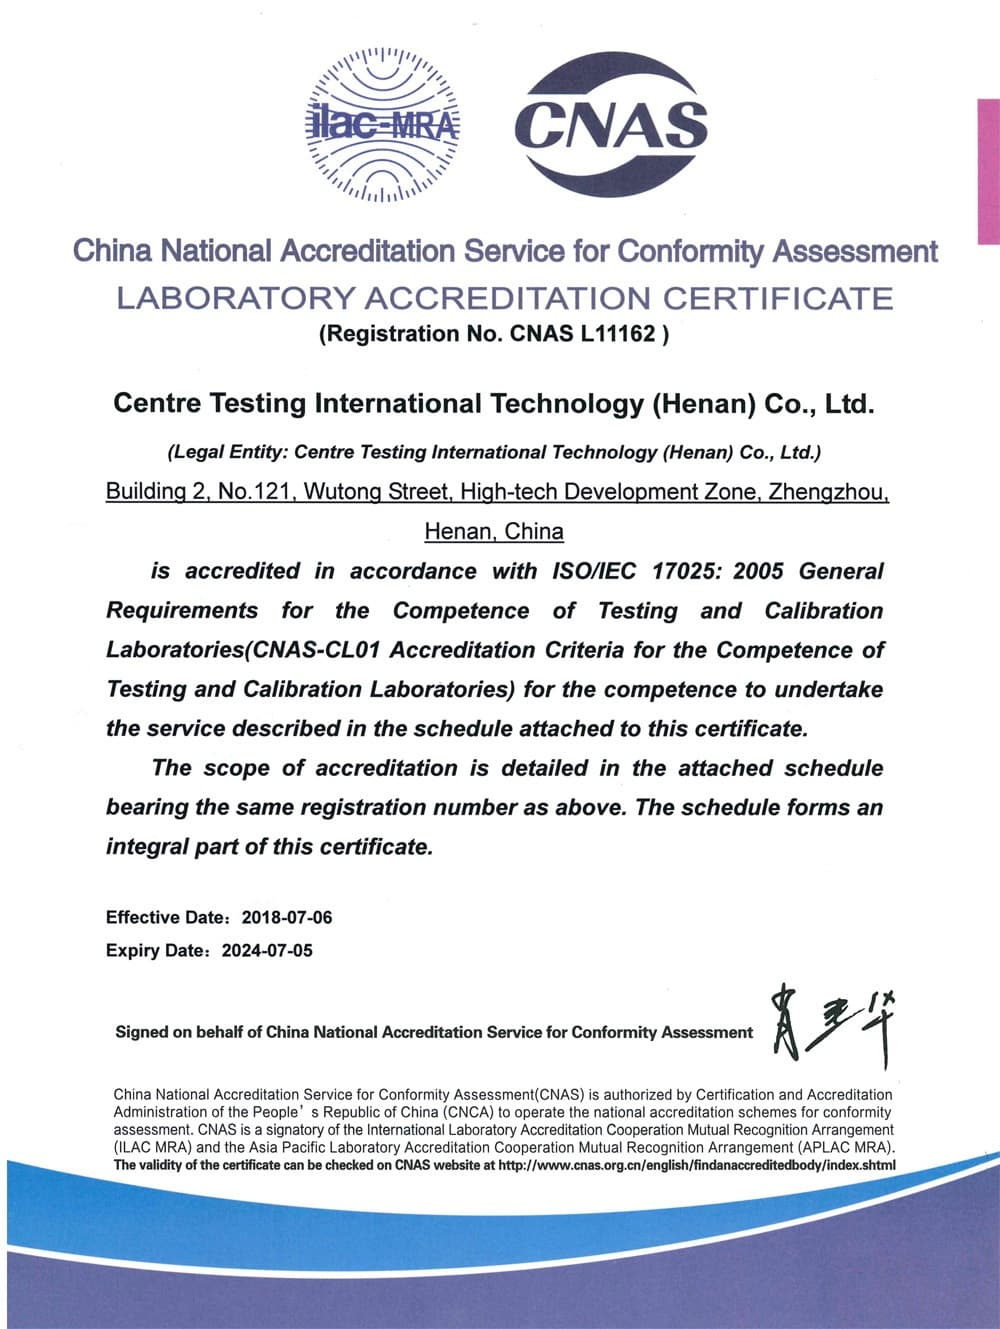 Henan CNAS Laboratory Accreditation Certificate